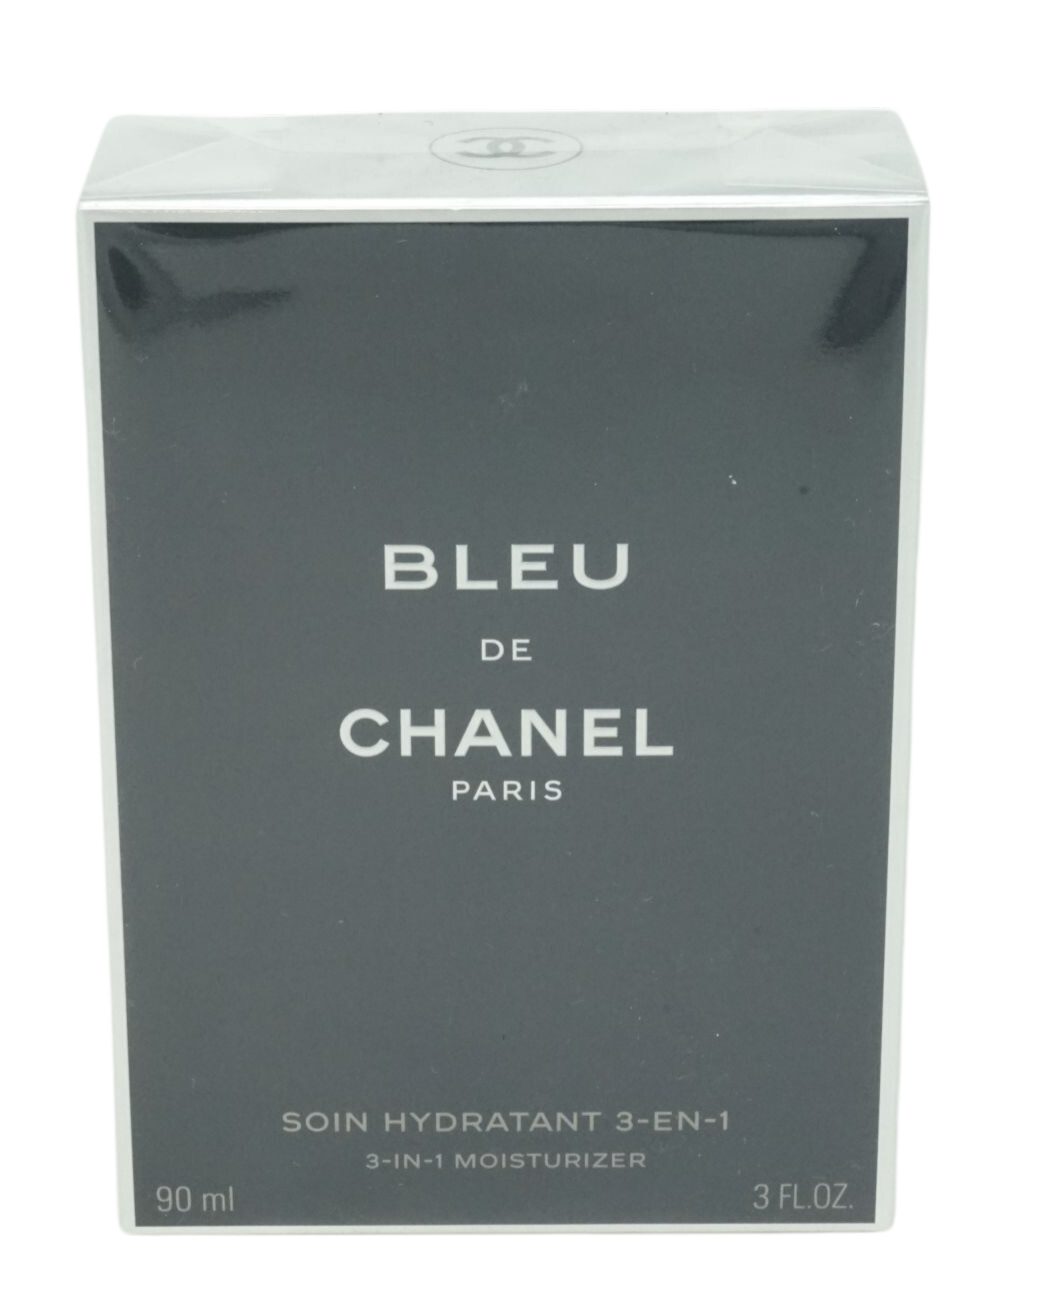 CHANEL Selbstbräunungstücher Lotion Chanel / de Moisturizer in 3 90ml 1 Chanel Bleu